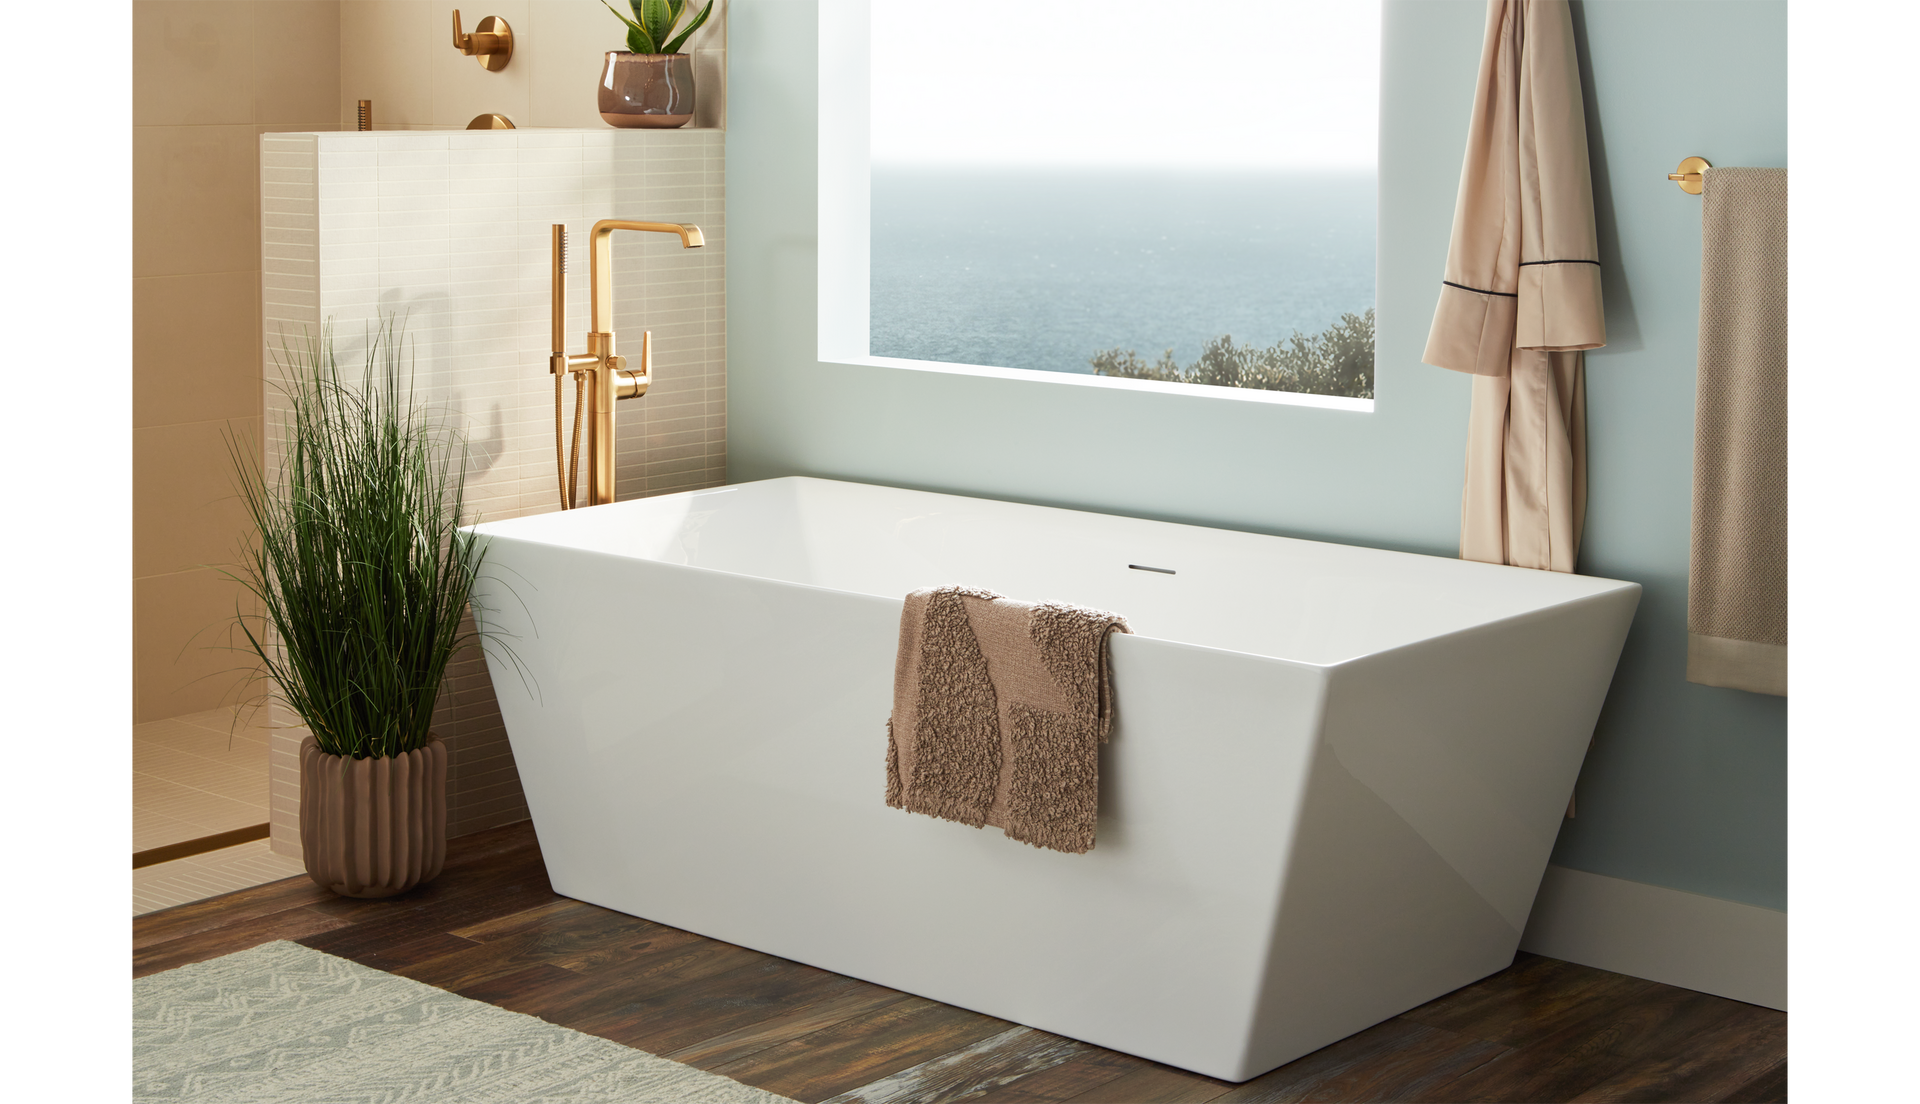 67" Hibiscus Rectangular Acrylic Freestanding Tub, Drea Freestanding Tub Faucet, Towel Bar - Brushed Gold